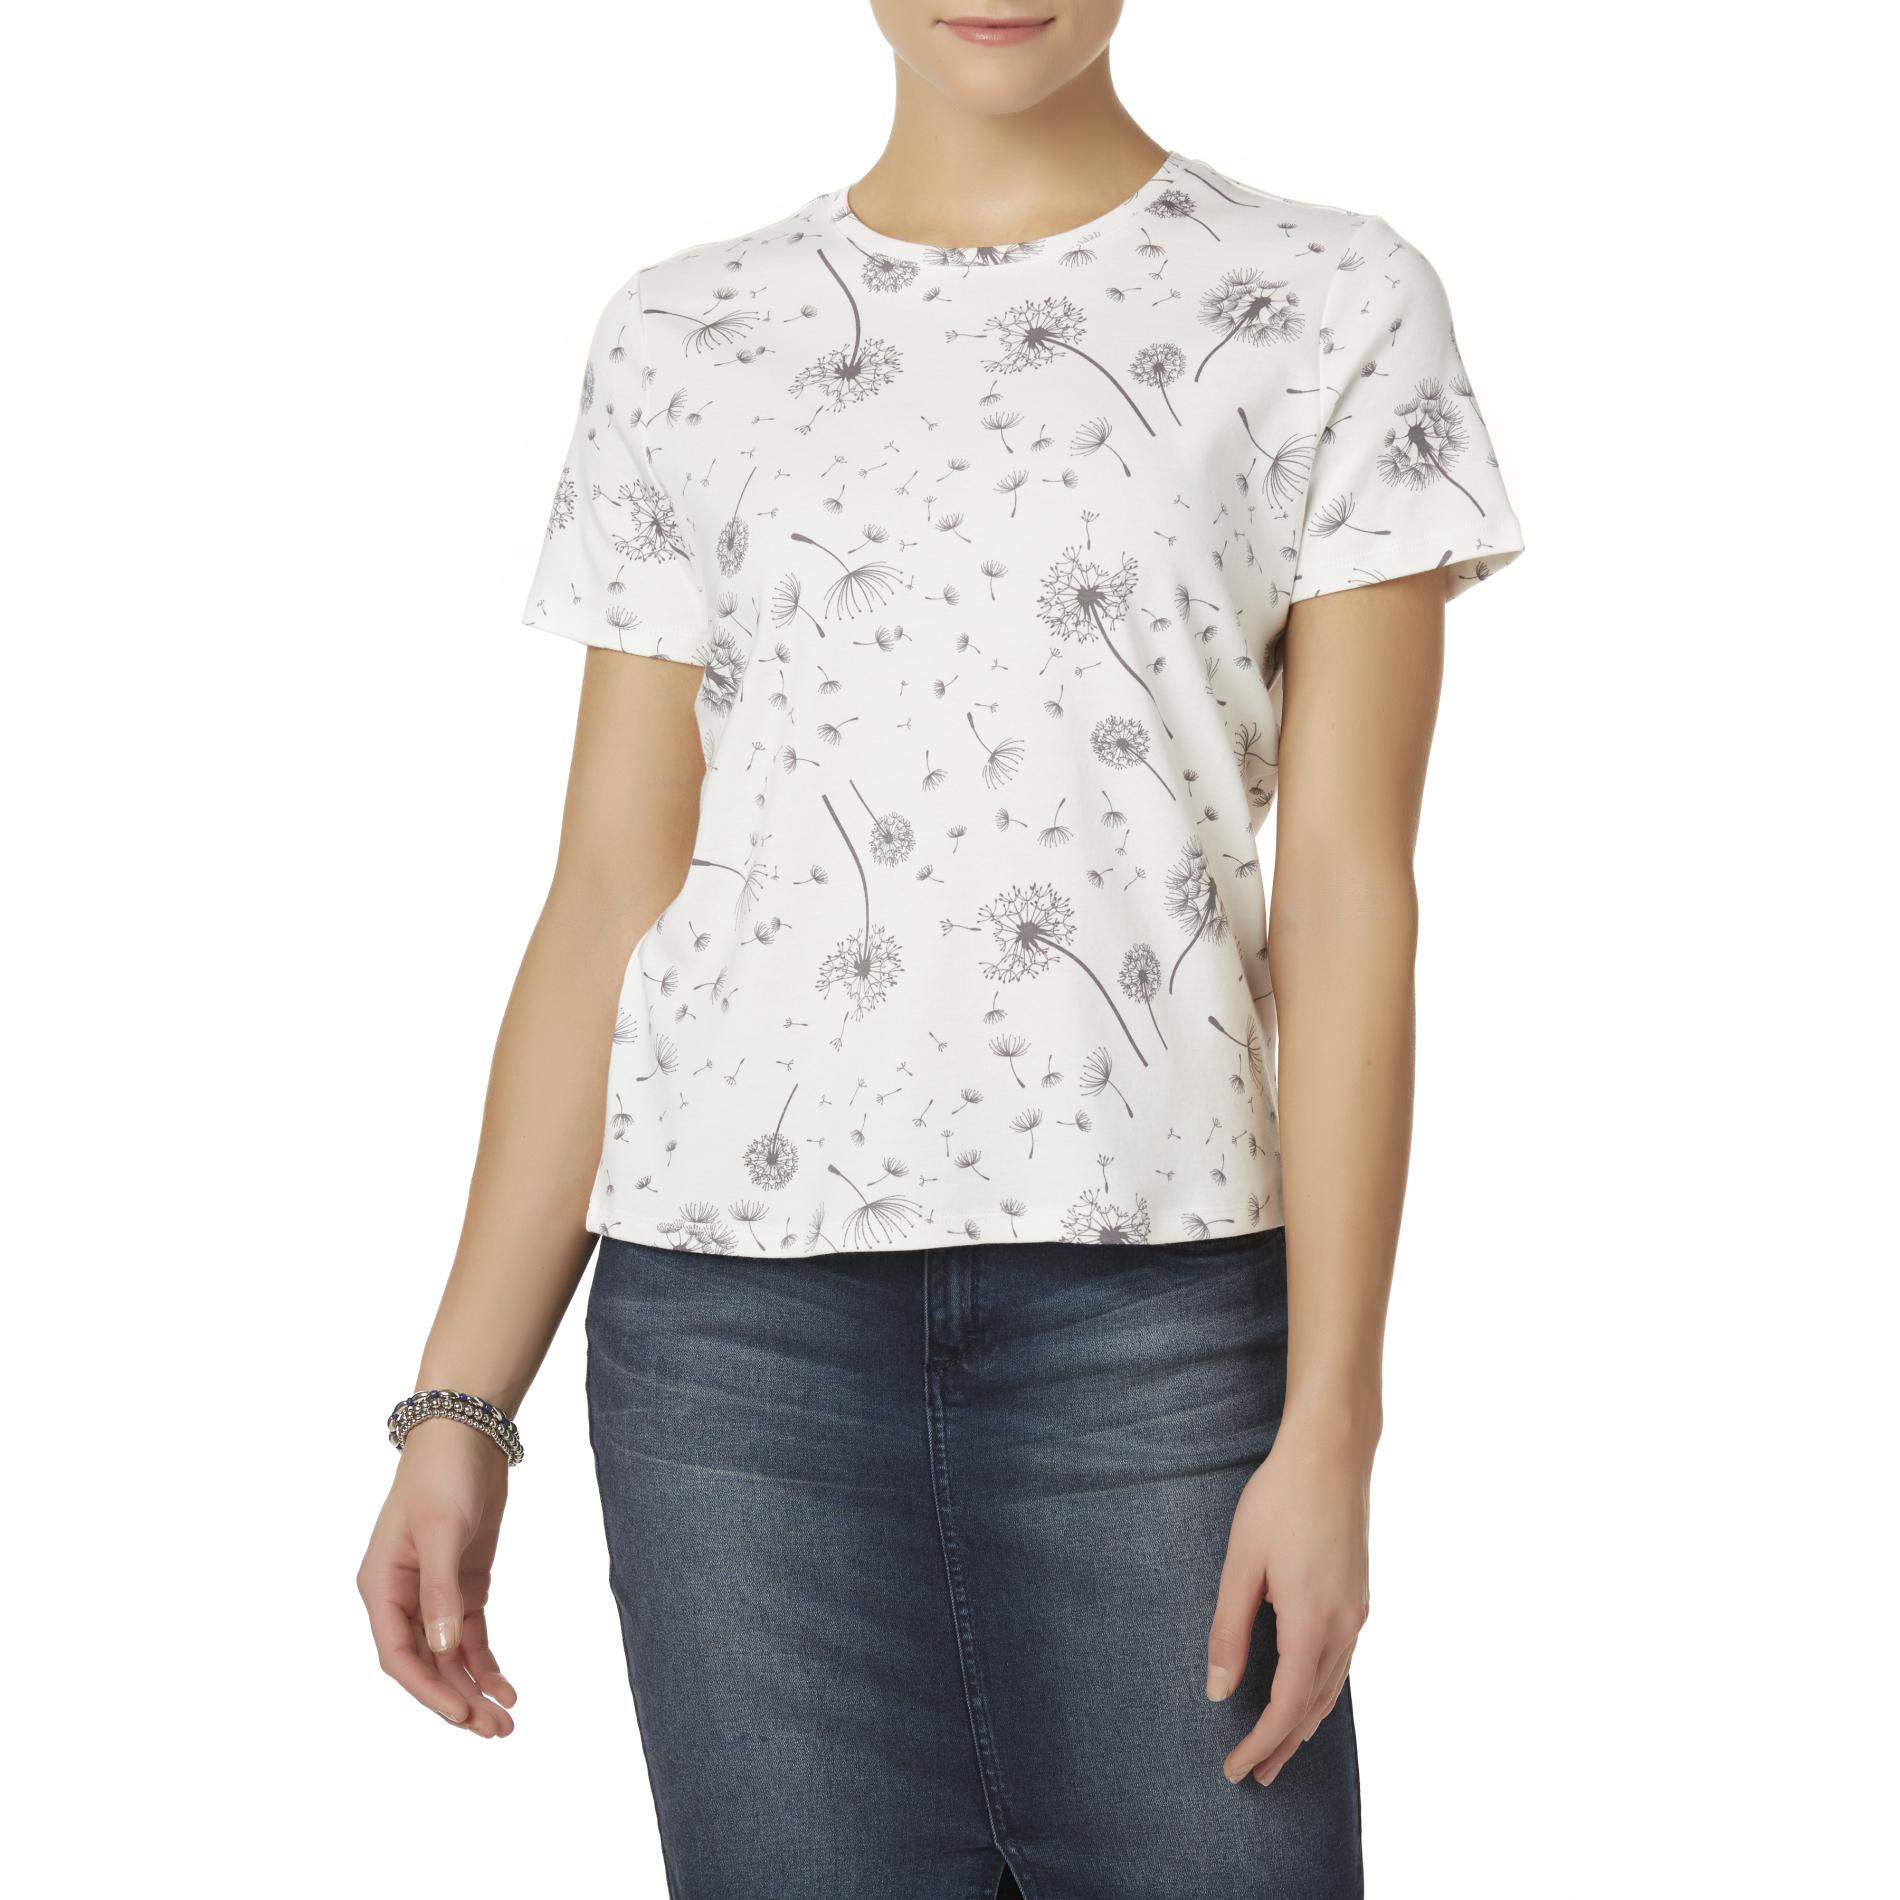 Laura Scott Petites' Crew Neck T-Shirt - Dandelions